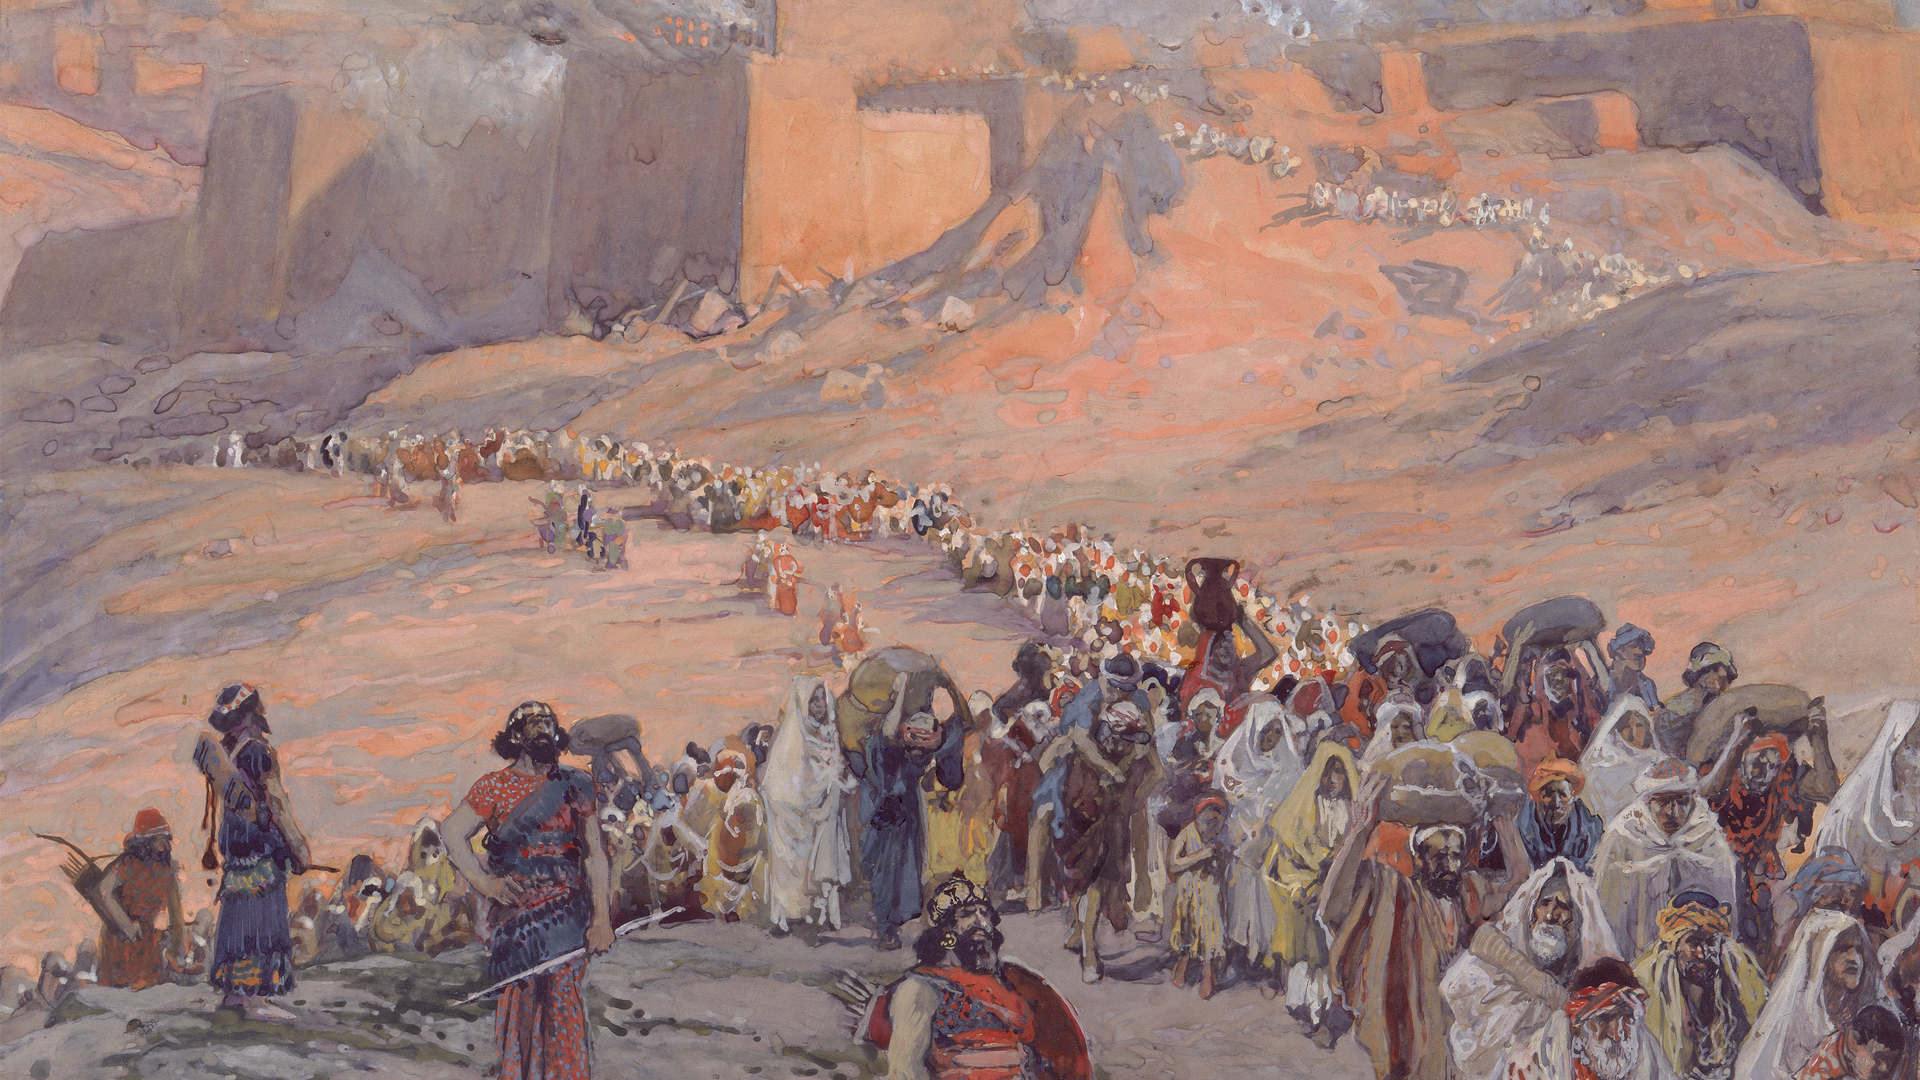 James Tissot painting depicting Jewish captives fleeing Jerusalem in 6th century BCE